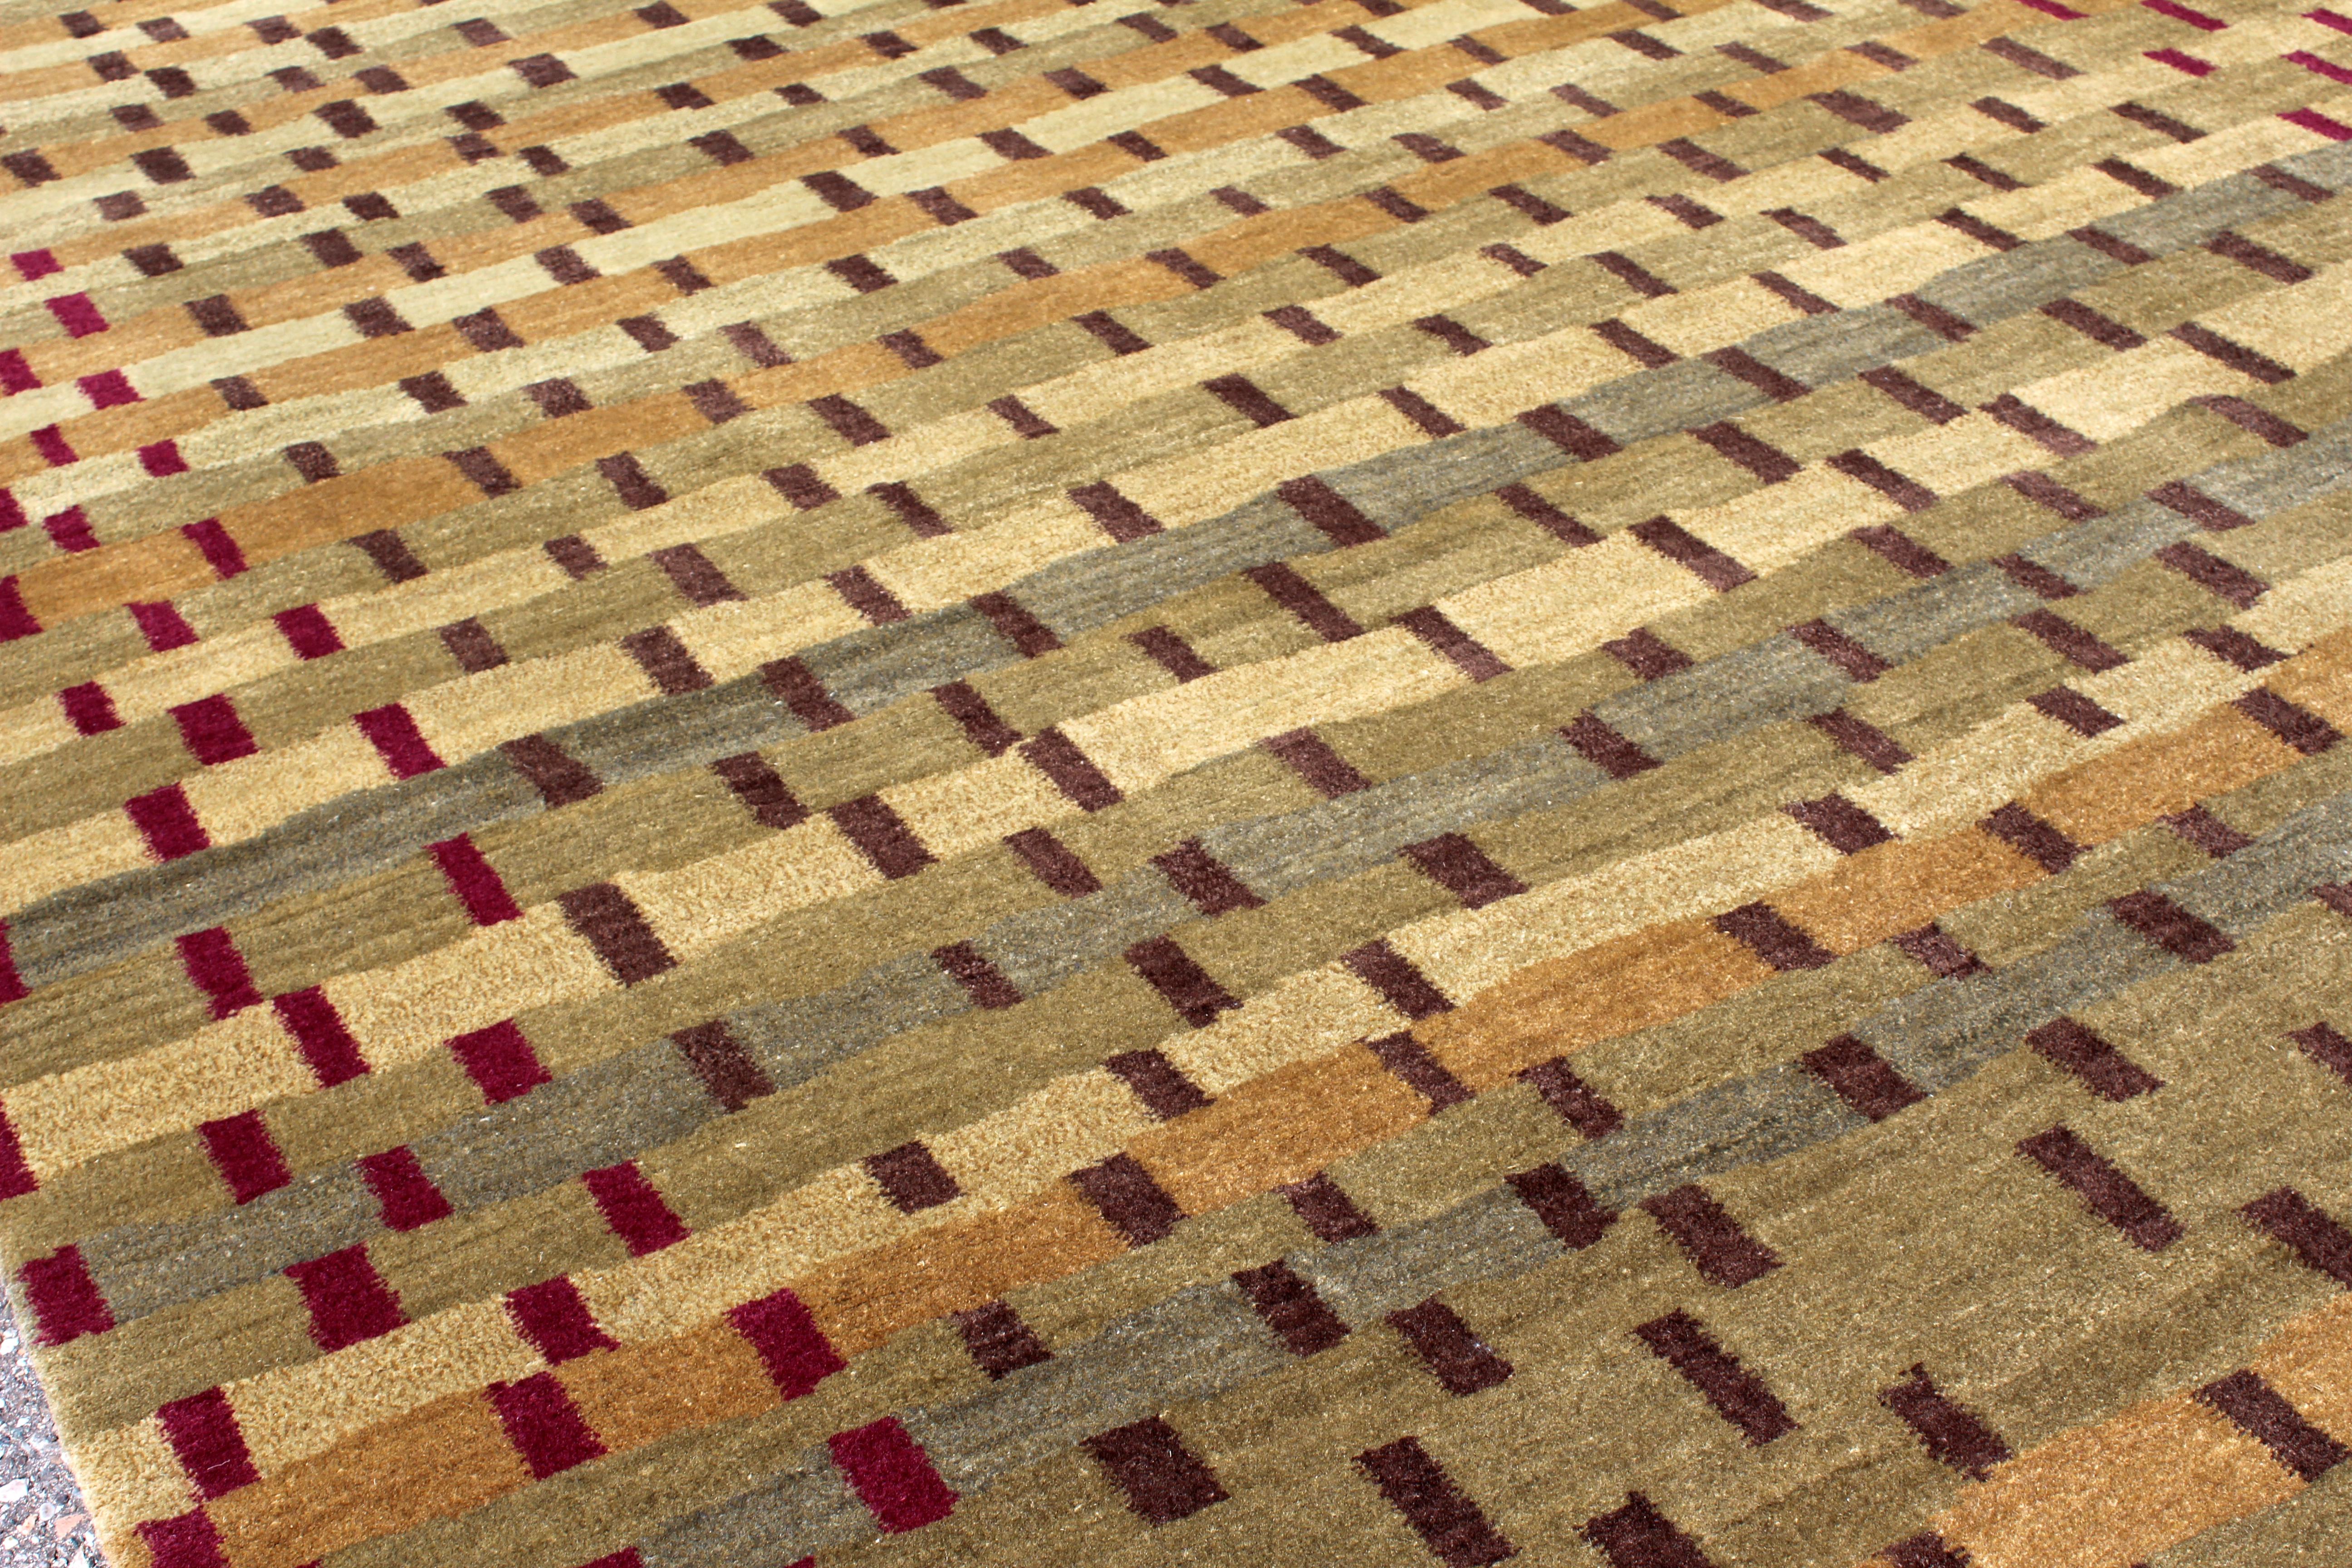 20th Century Contemporary Custom Made Modernist Wool Silk Blend Rectangular Area Rug Carpet